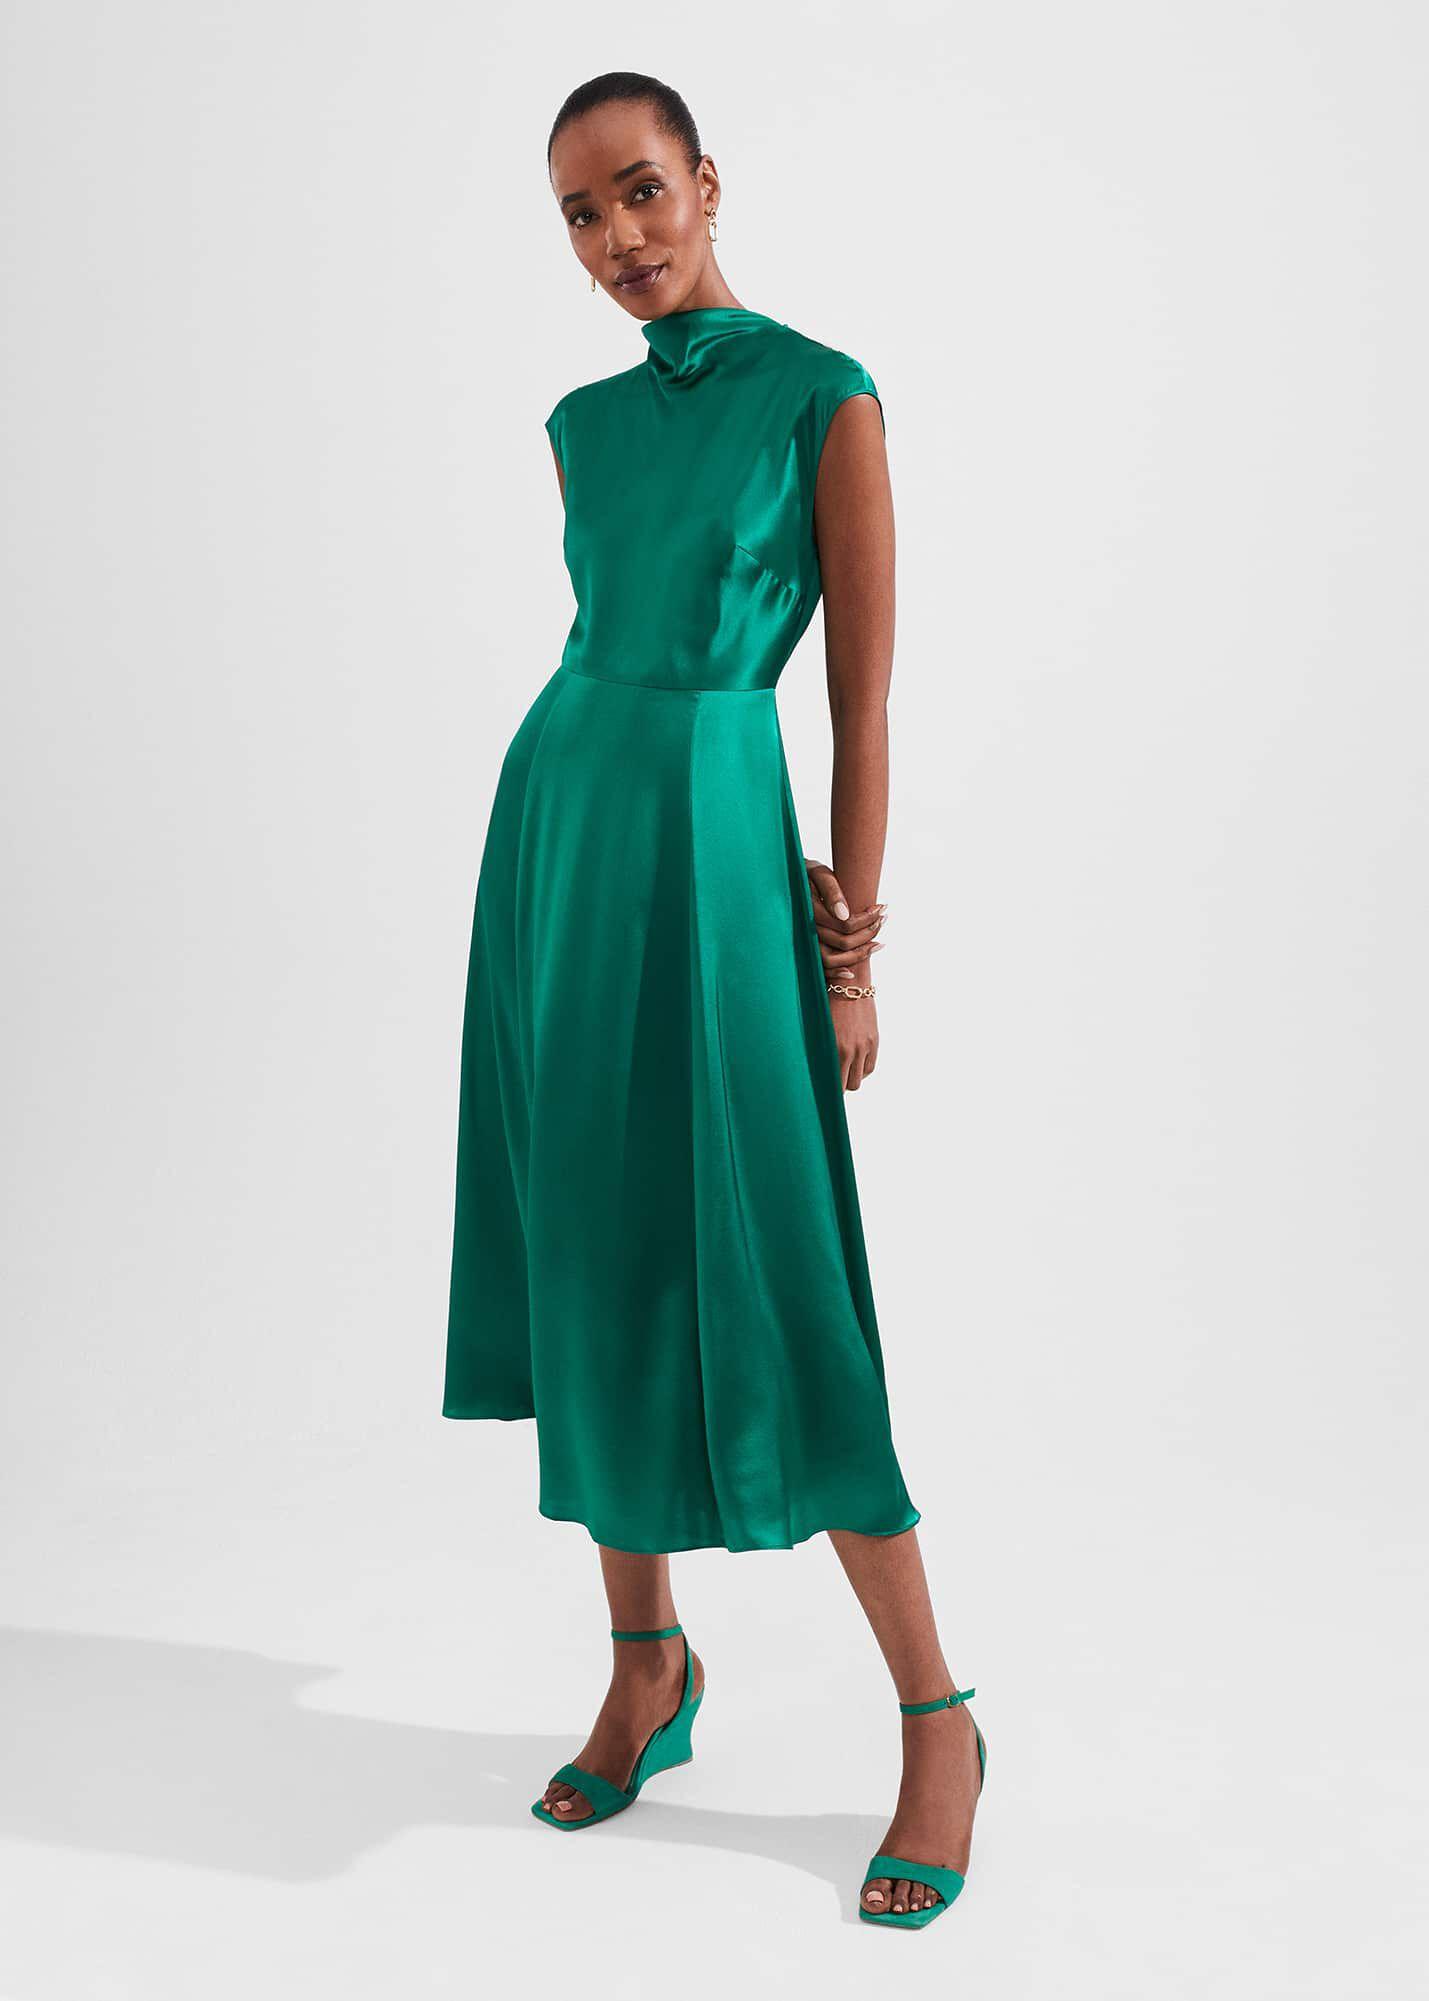 Hobbs Charlize Silk Dress in Green | Lyst